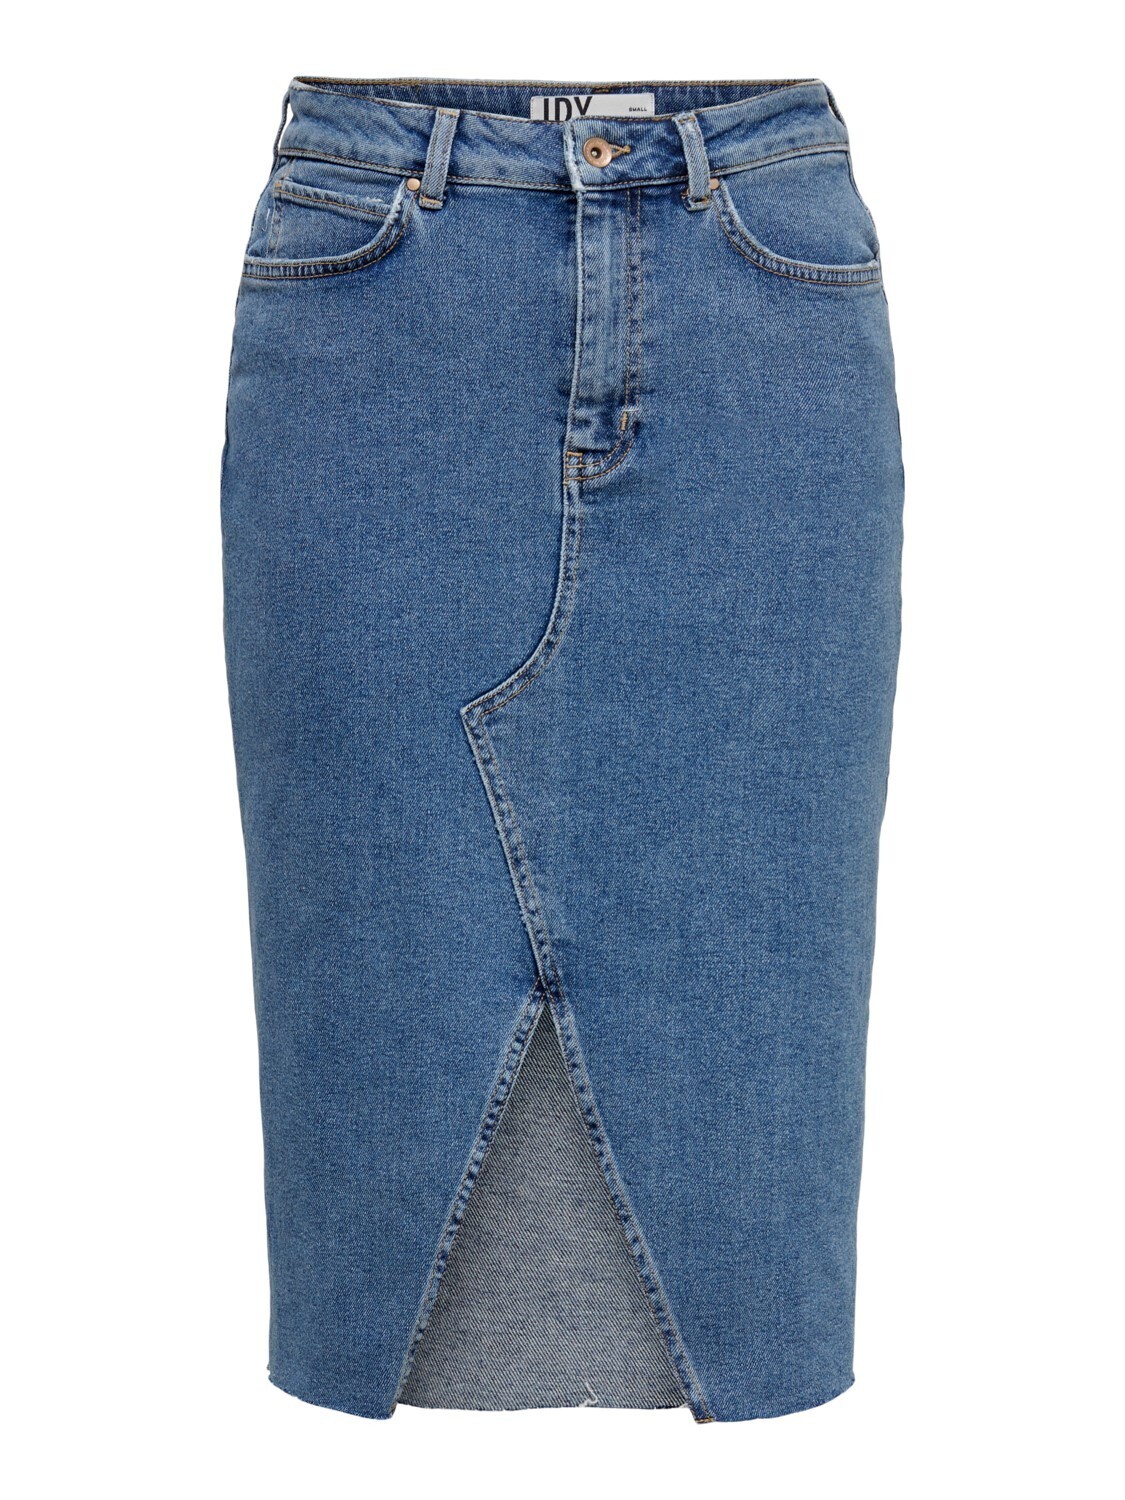 Midi rok jeans – KAJA – medium blue denim – lou. – dé webshop voor  betaalbare dameskleding en accessoires